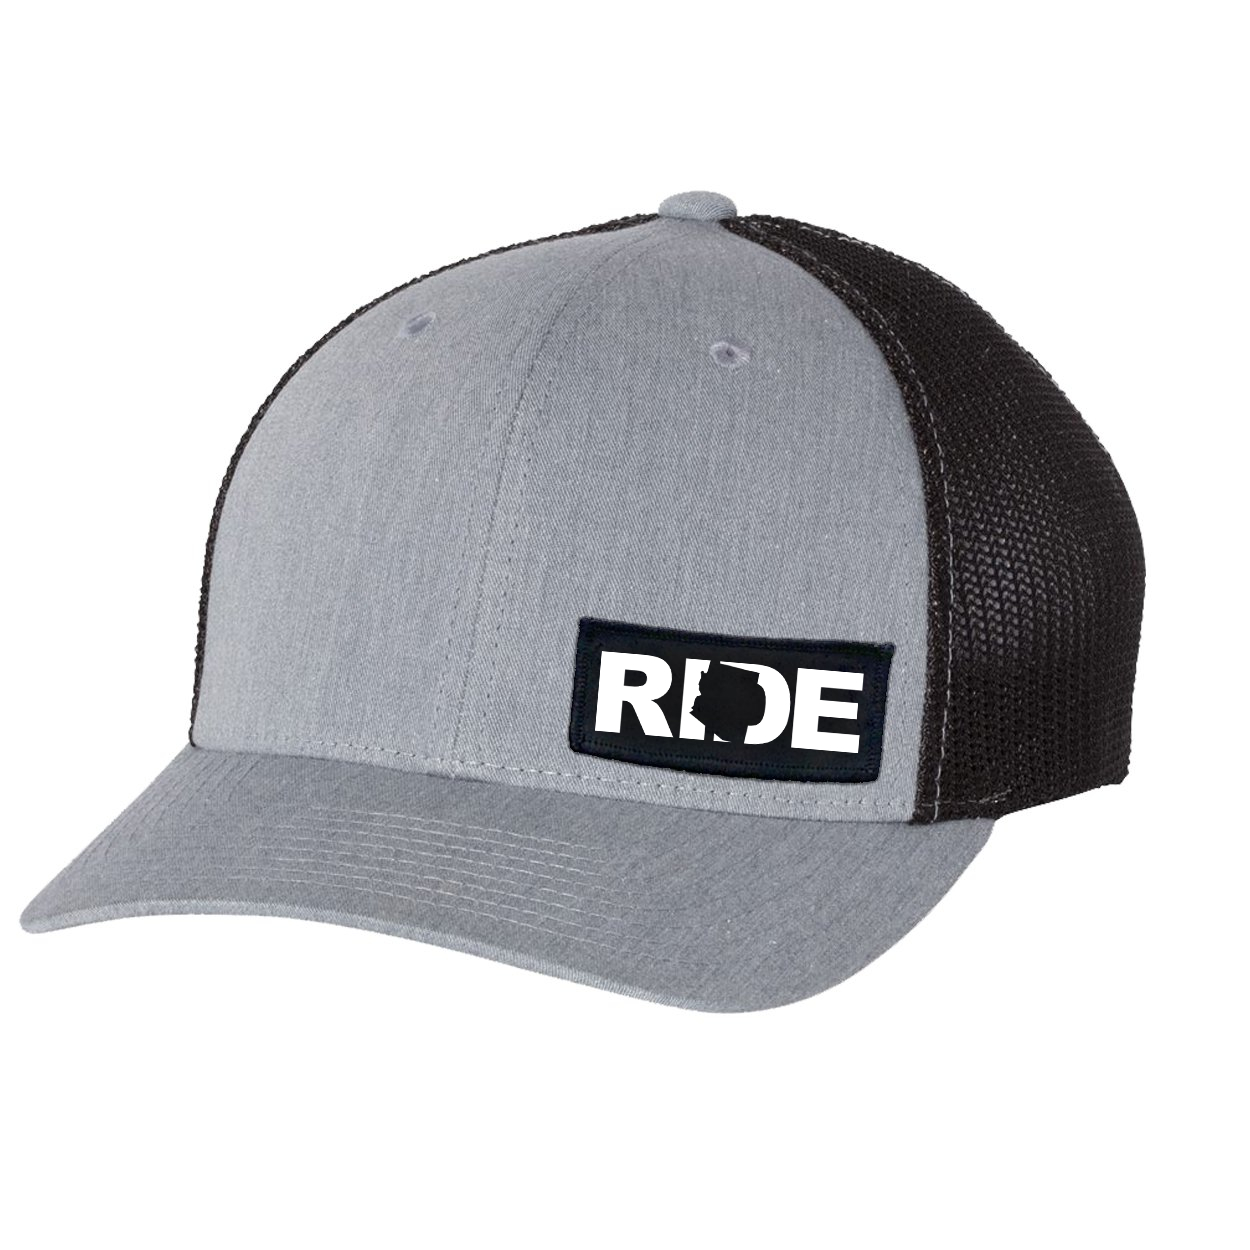 Ride Arizona Night Out Woven Patch Flex-Fit Hat Heather Gray/Black (White Logo)